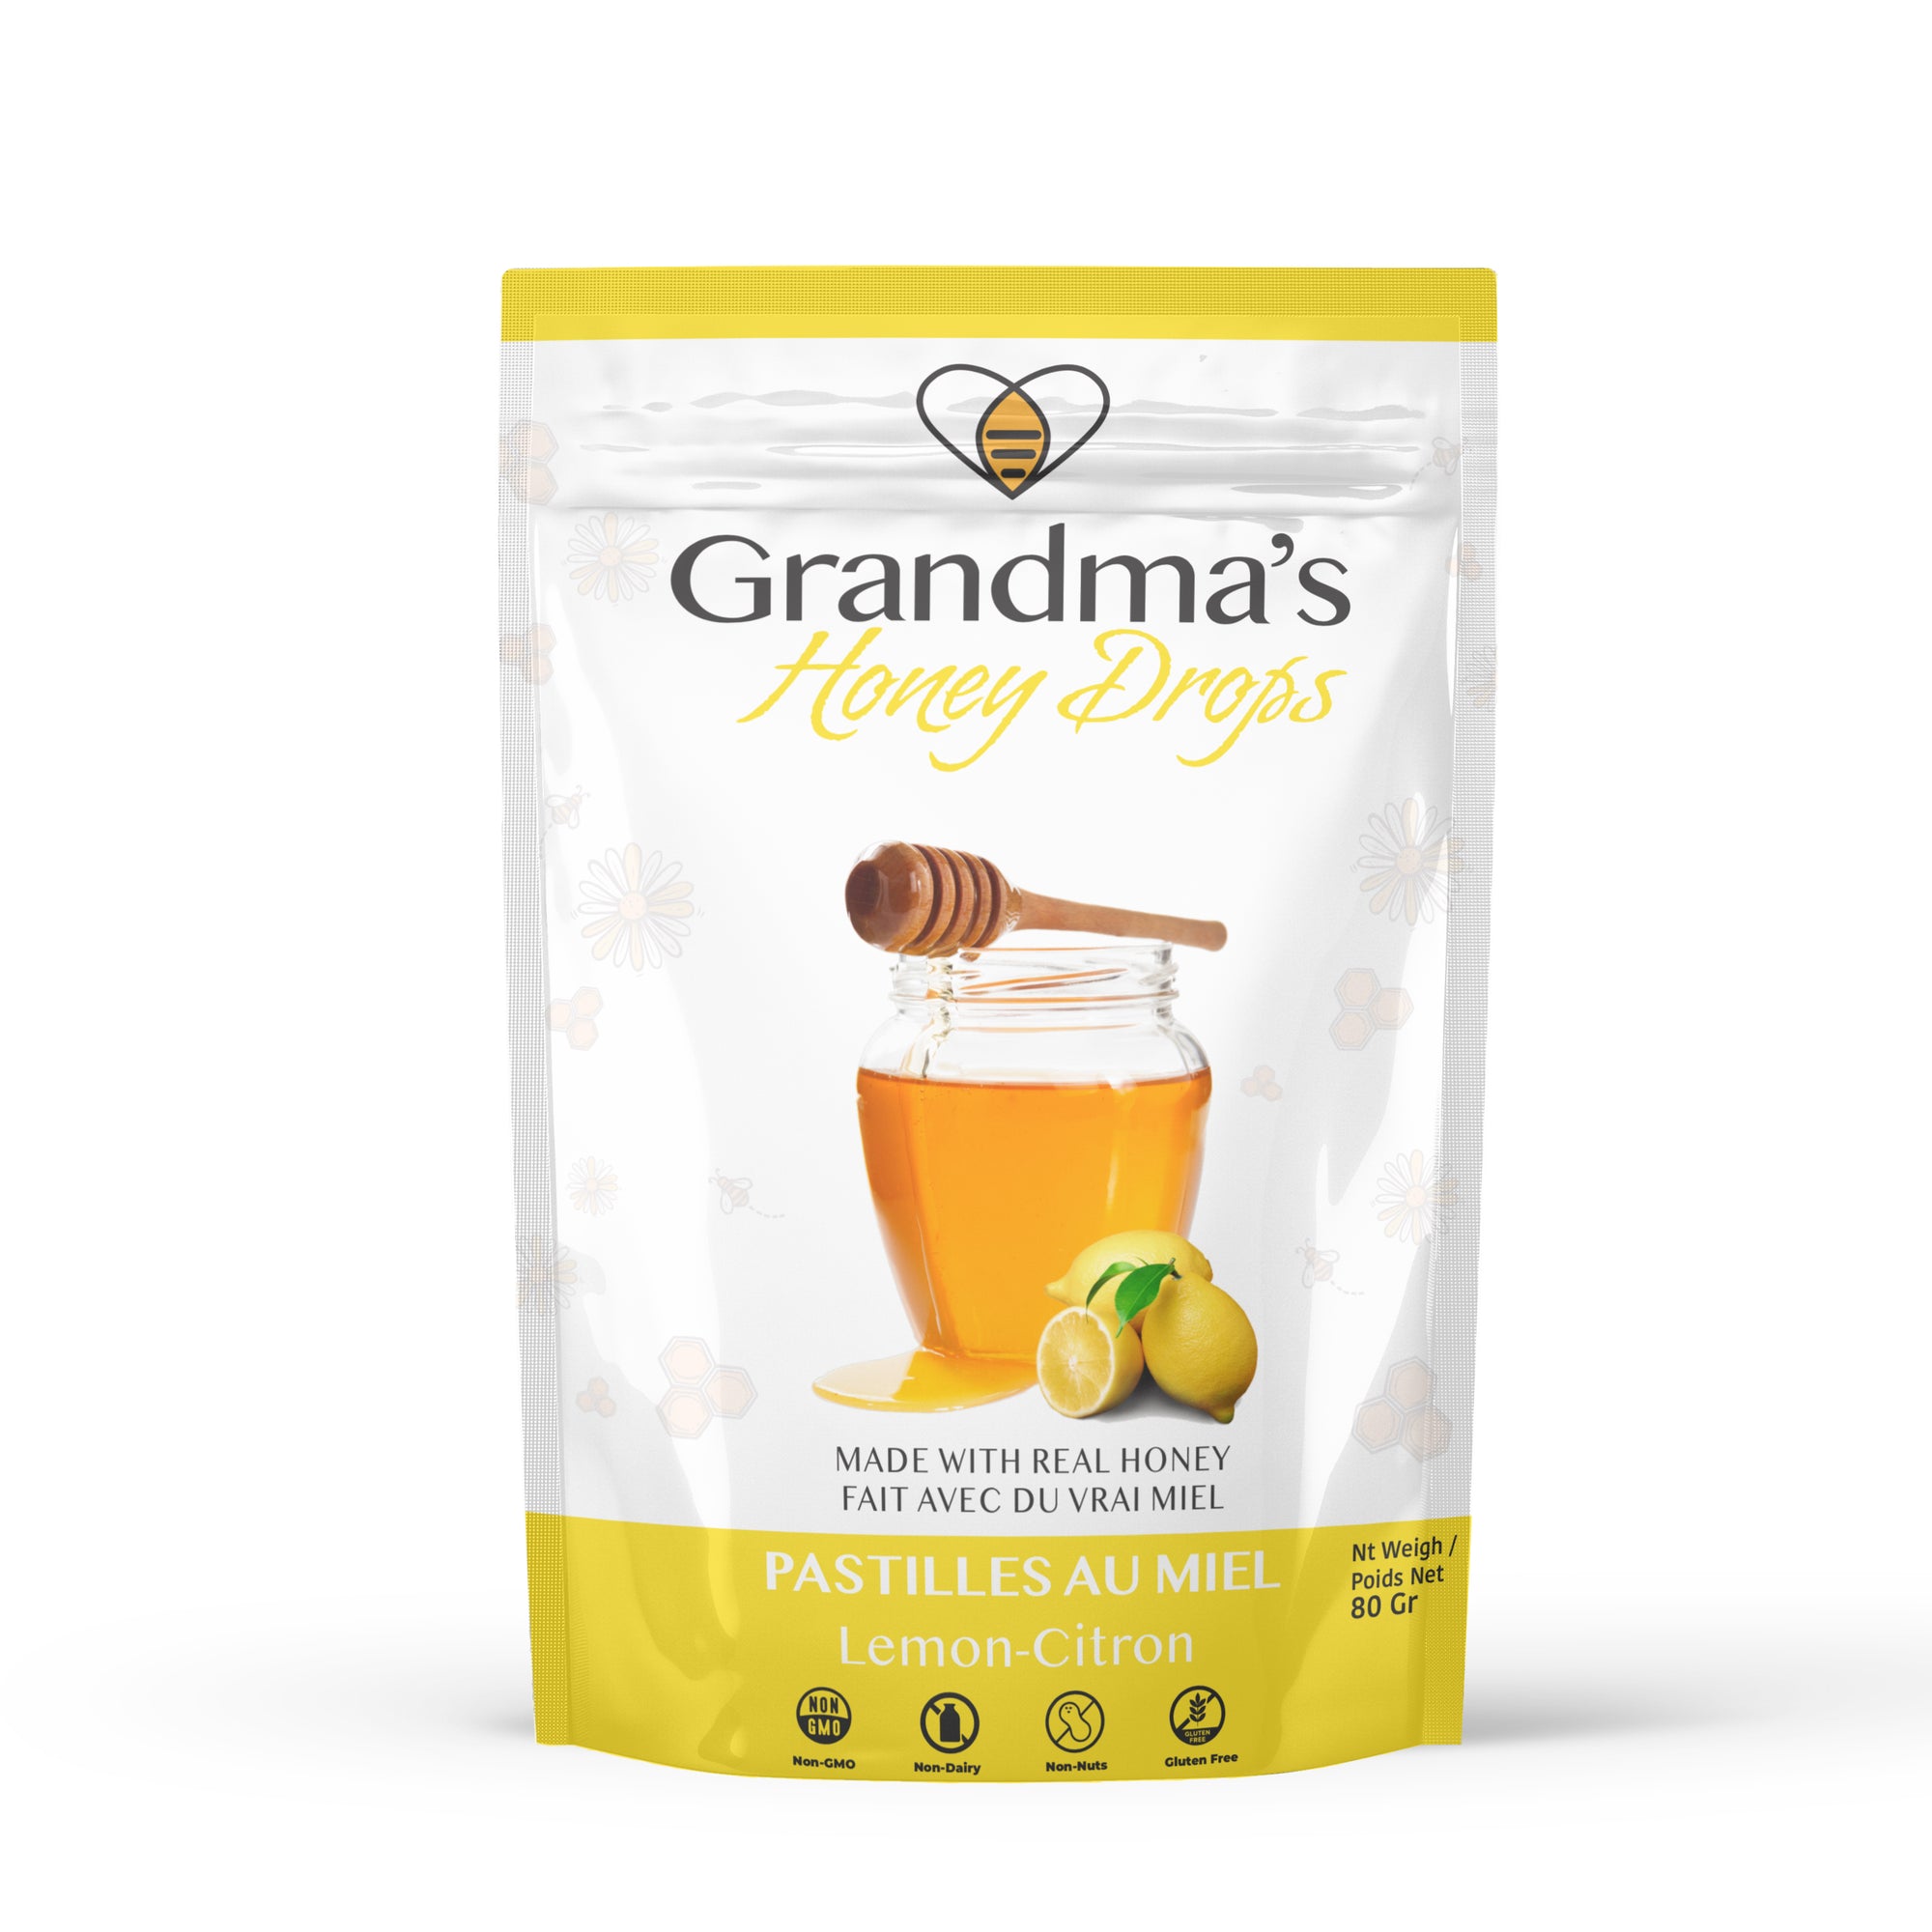 Grandma's For Bees honey drops